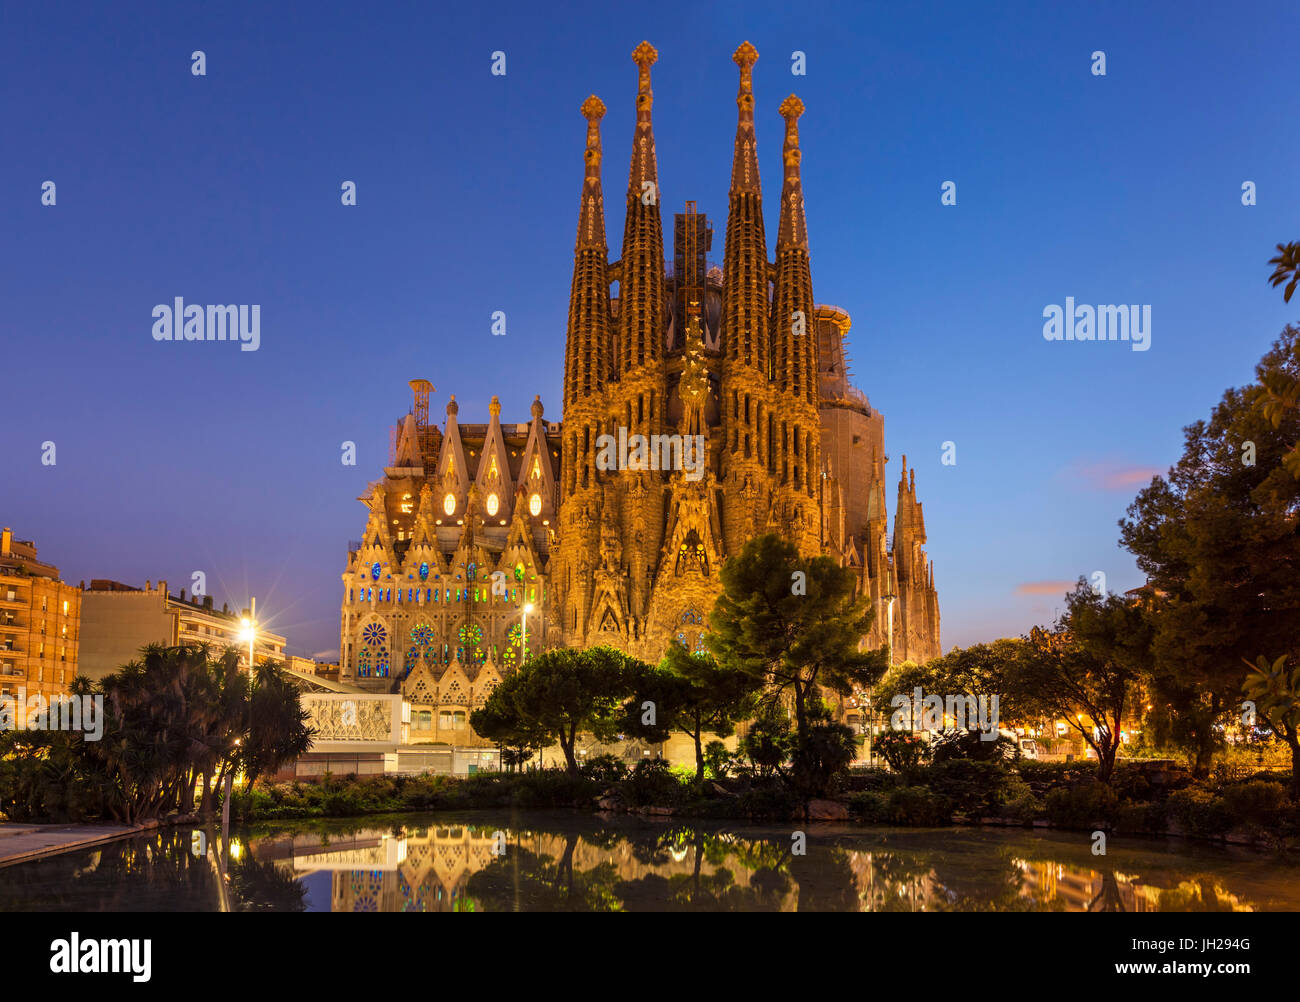 La iglesia de La Sagrada Familia iluminada de noche diseñado por Antoni Gaudí, UNESCO, reflejado en la piscina, Barcelona, Cataluña, España Foto de stock